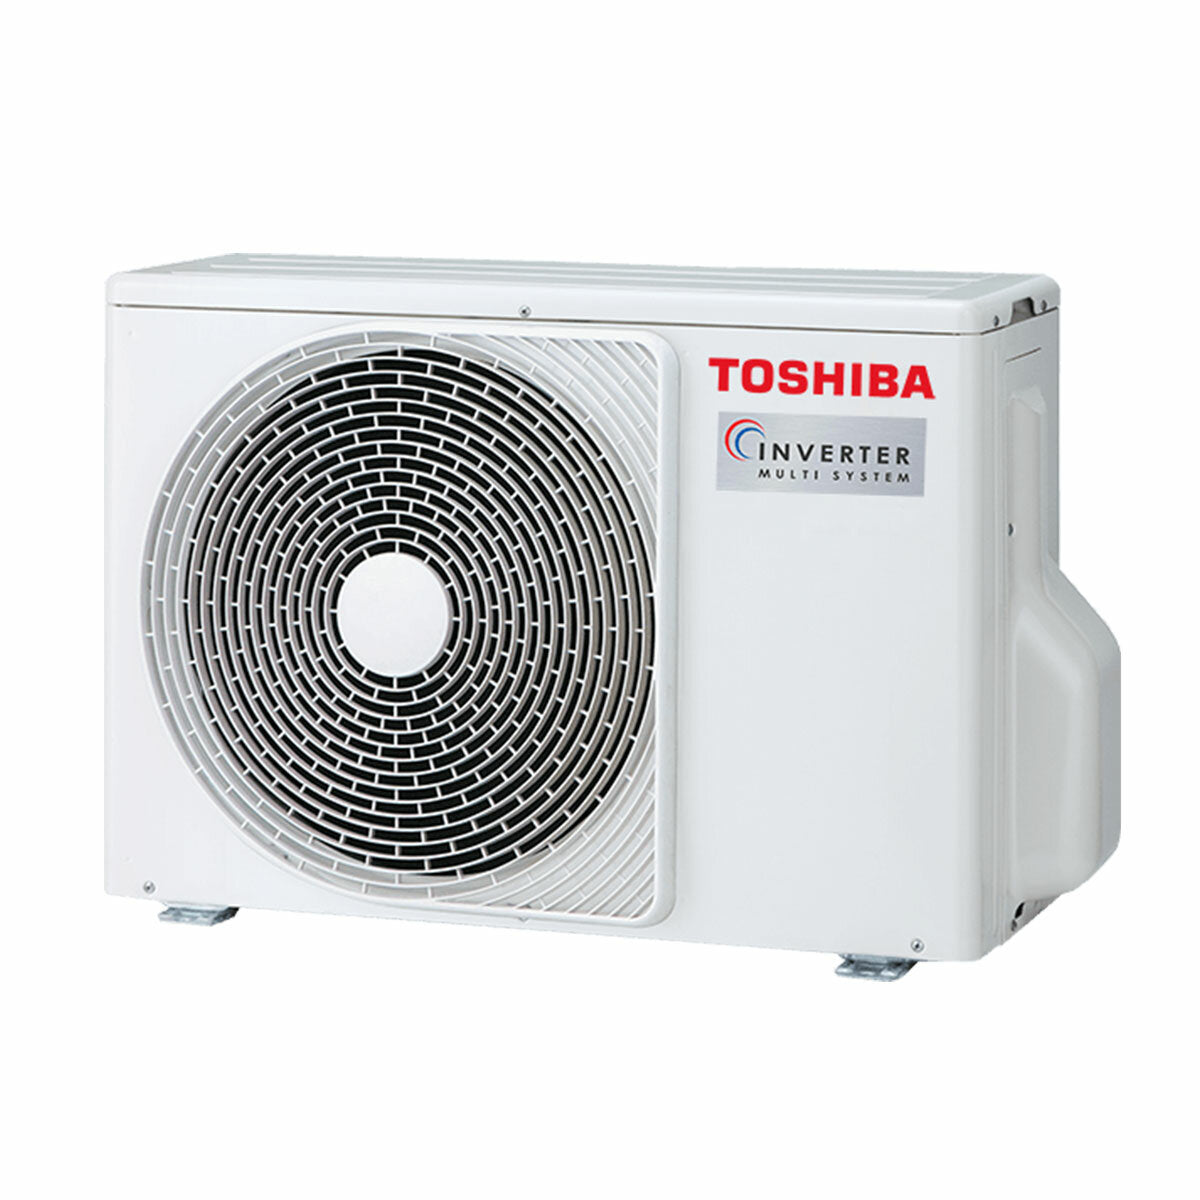 Toshiba New Seiya trial split air conditioner 7000+7000+16000 BTU inverter A+++ external unit 5.2 kW